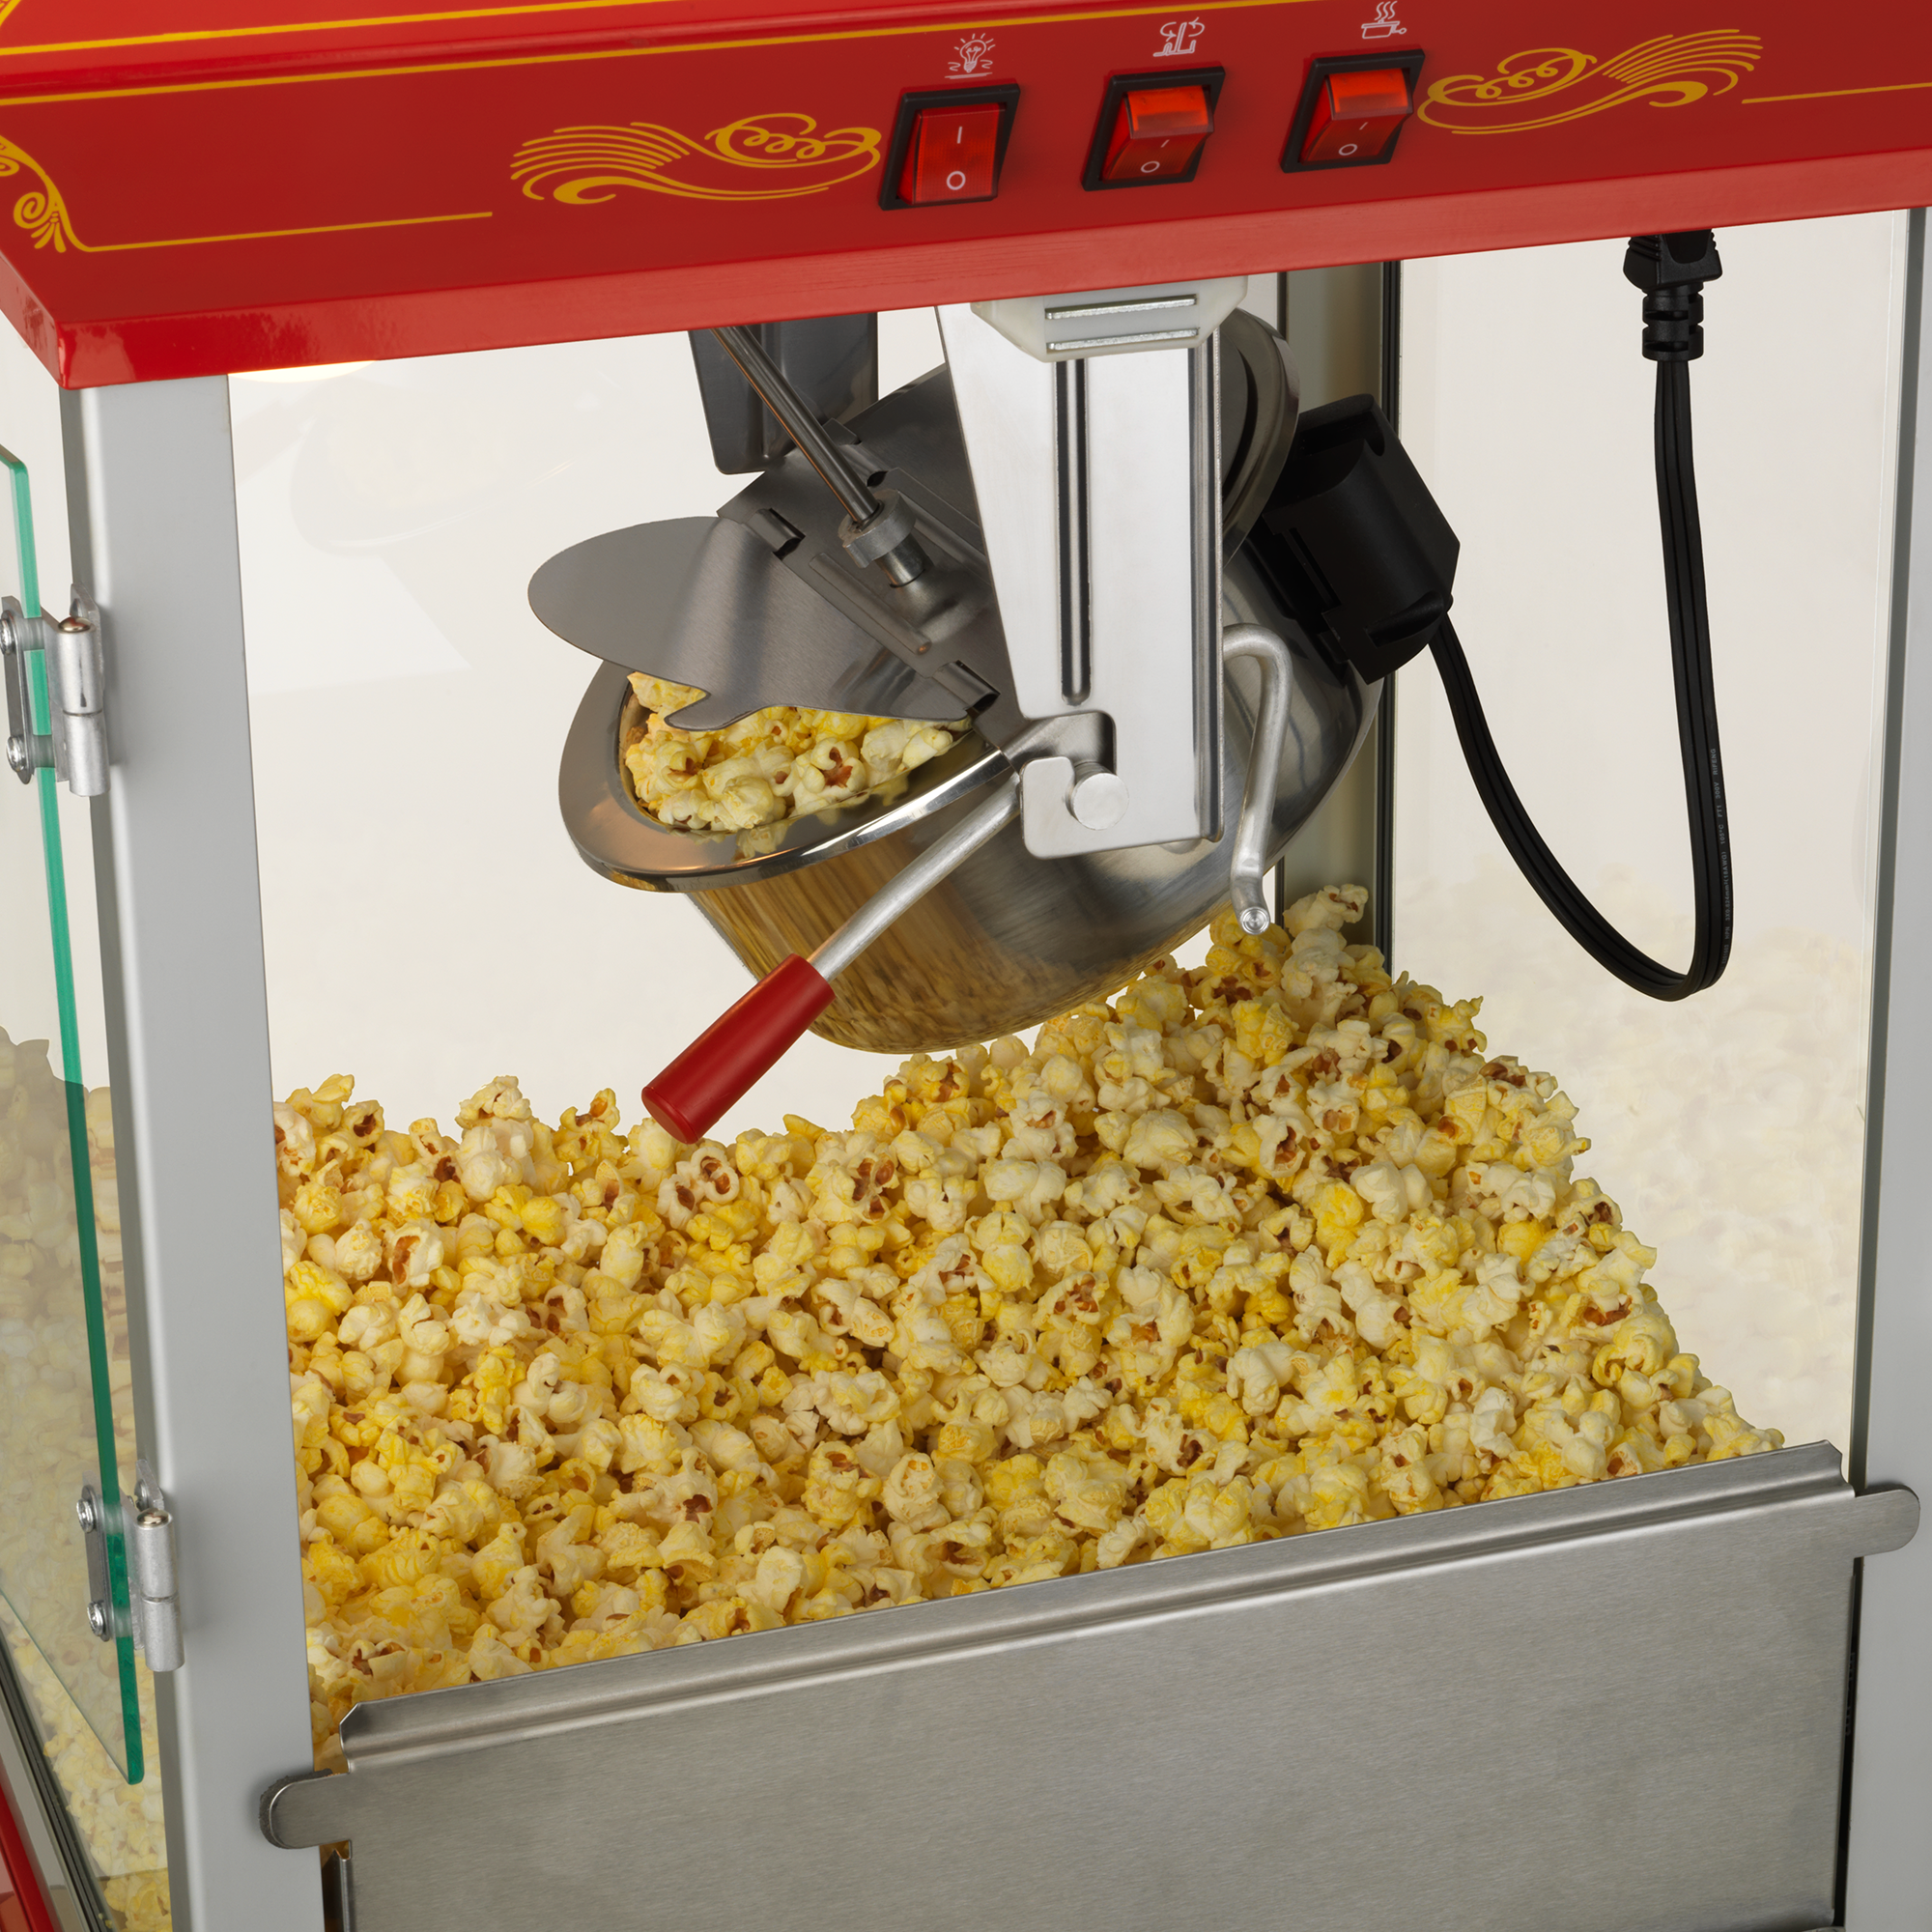 FunTime FT860CR 8oz Premium Red/Gold Popcorn Popper Machine Maker Cart -  funtimepopcorn